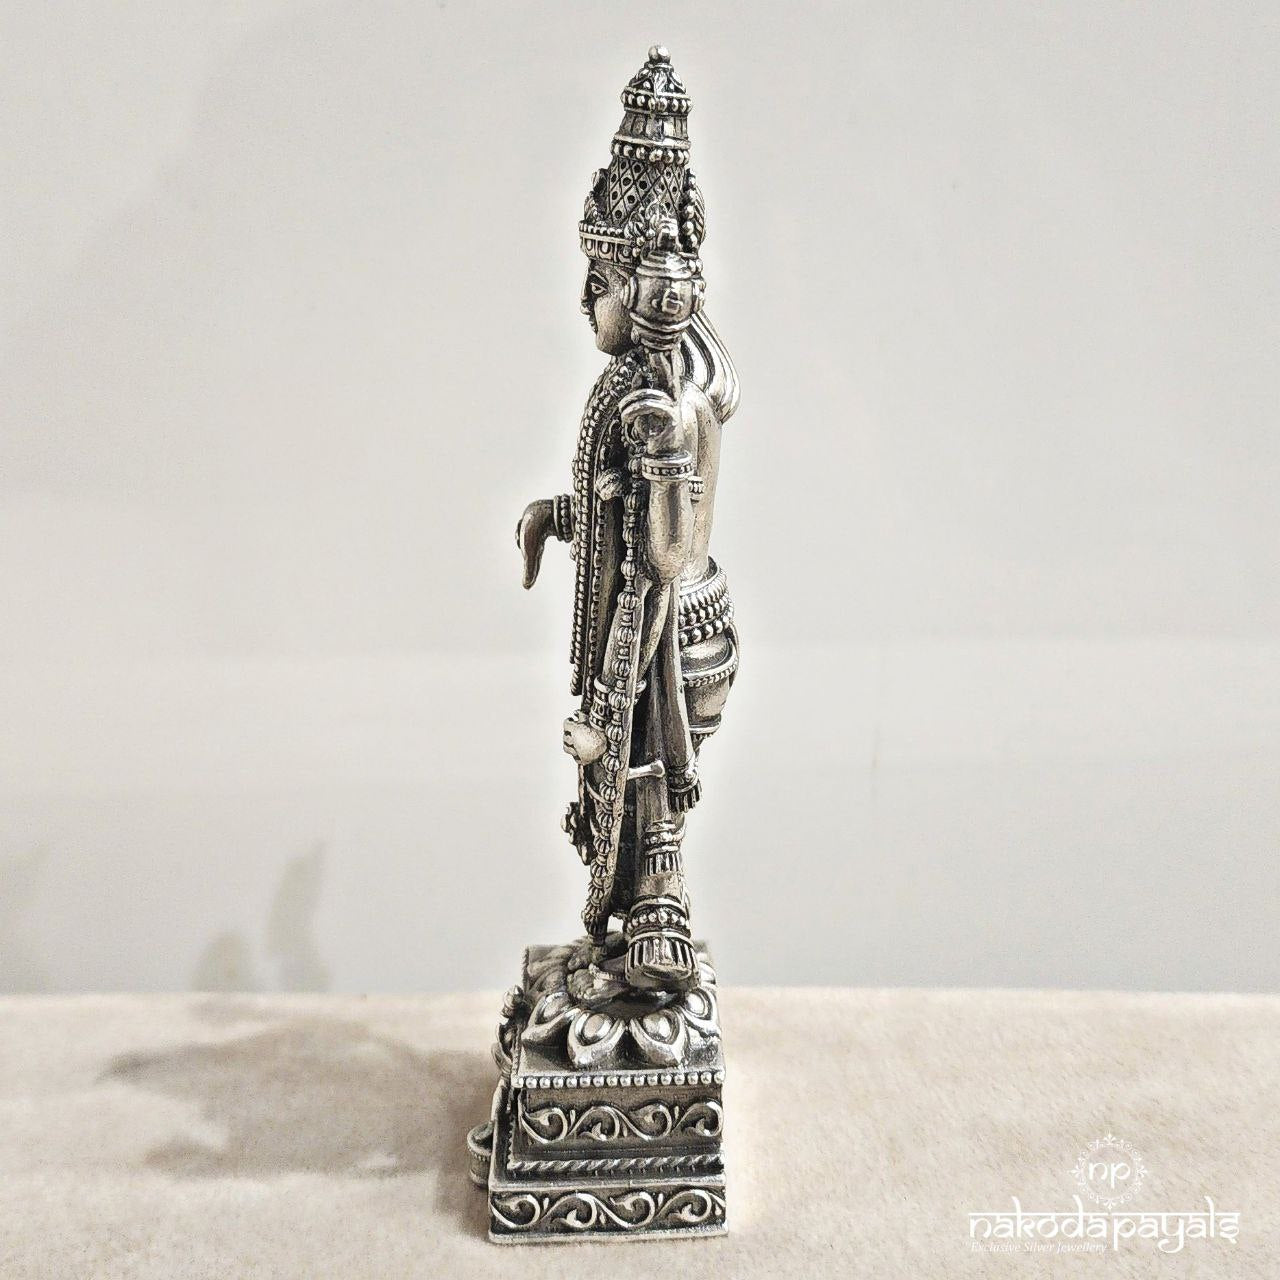 Tirupathi Balaji Idol (Aa0810)